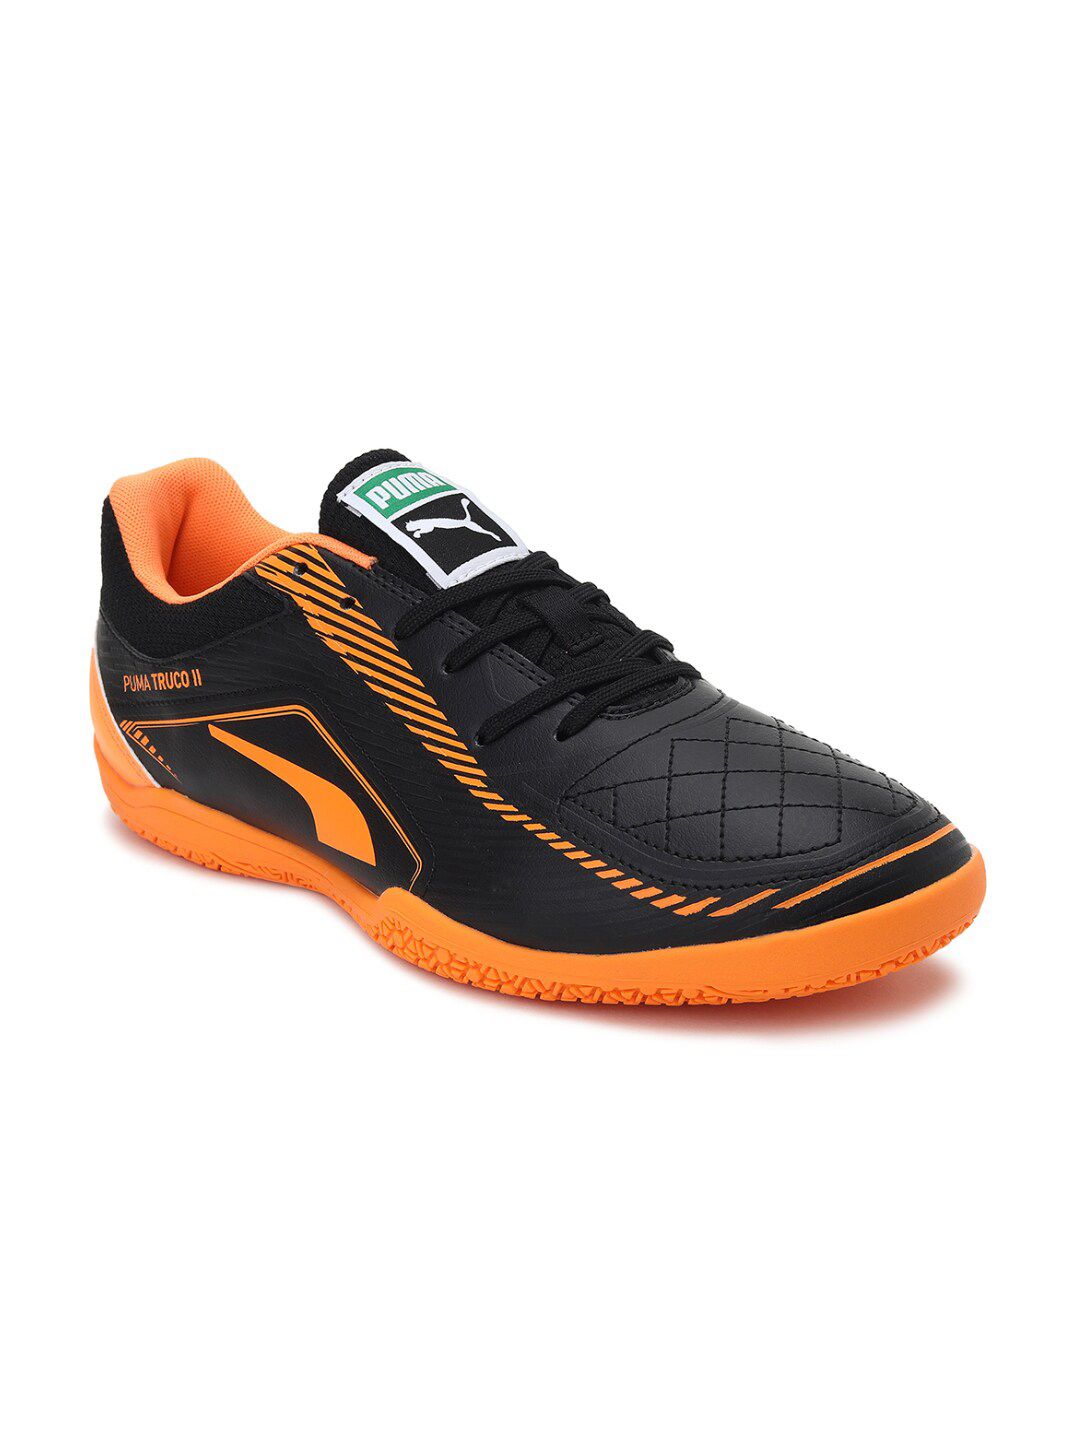 Puma Unisex Black Football Non-Marking TRUCO II Shoes Price in India